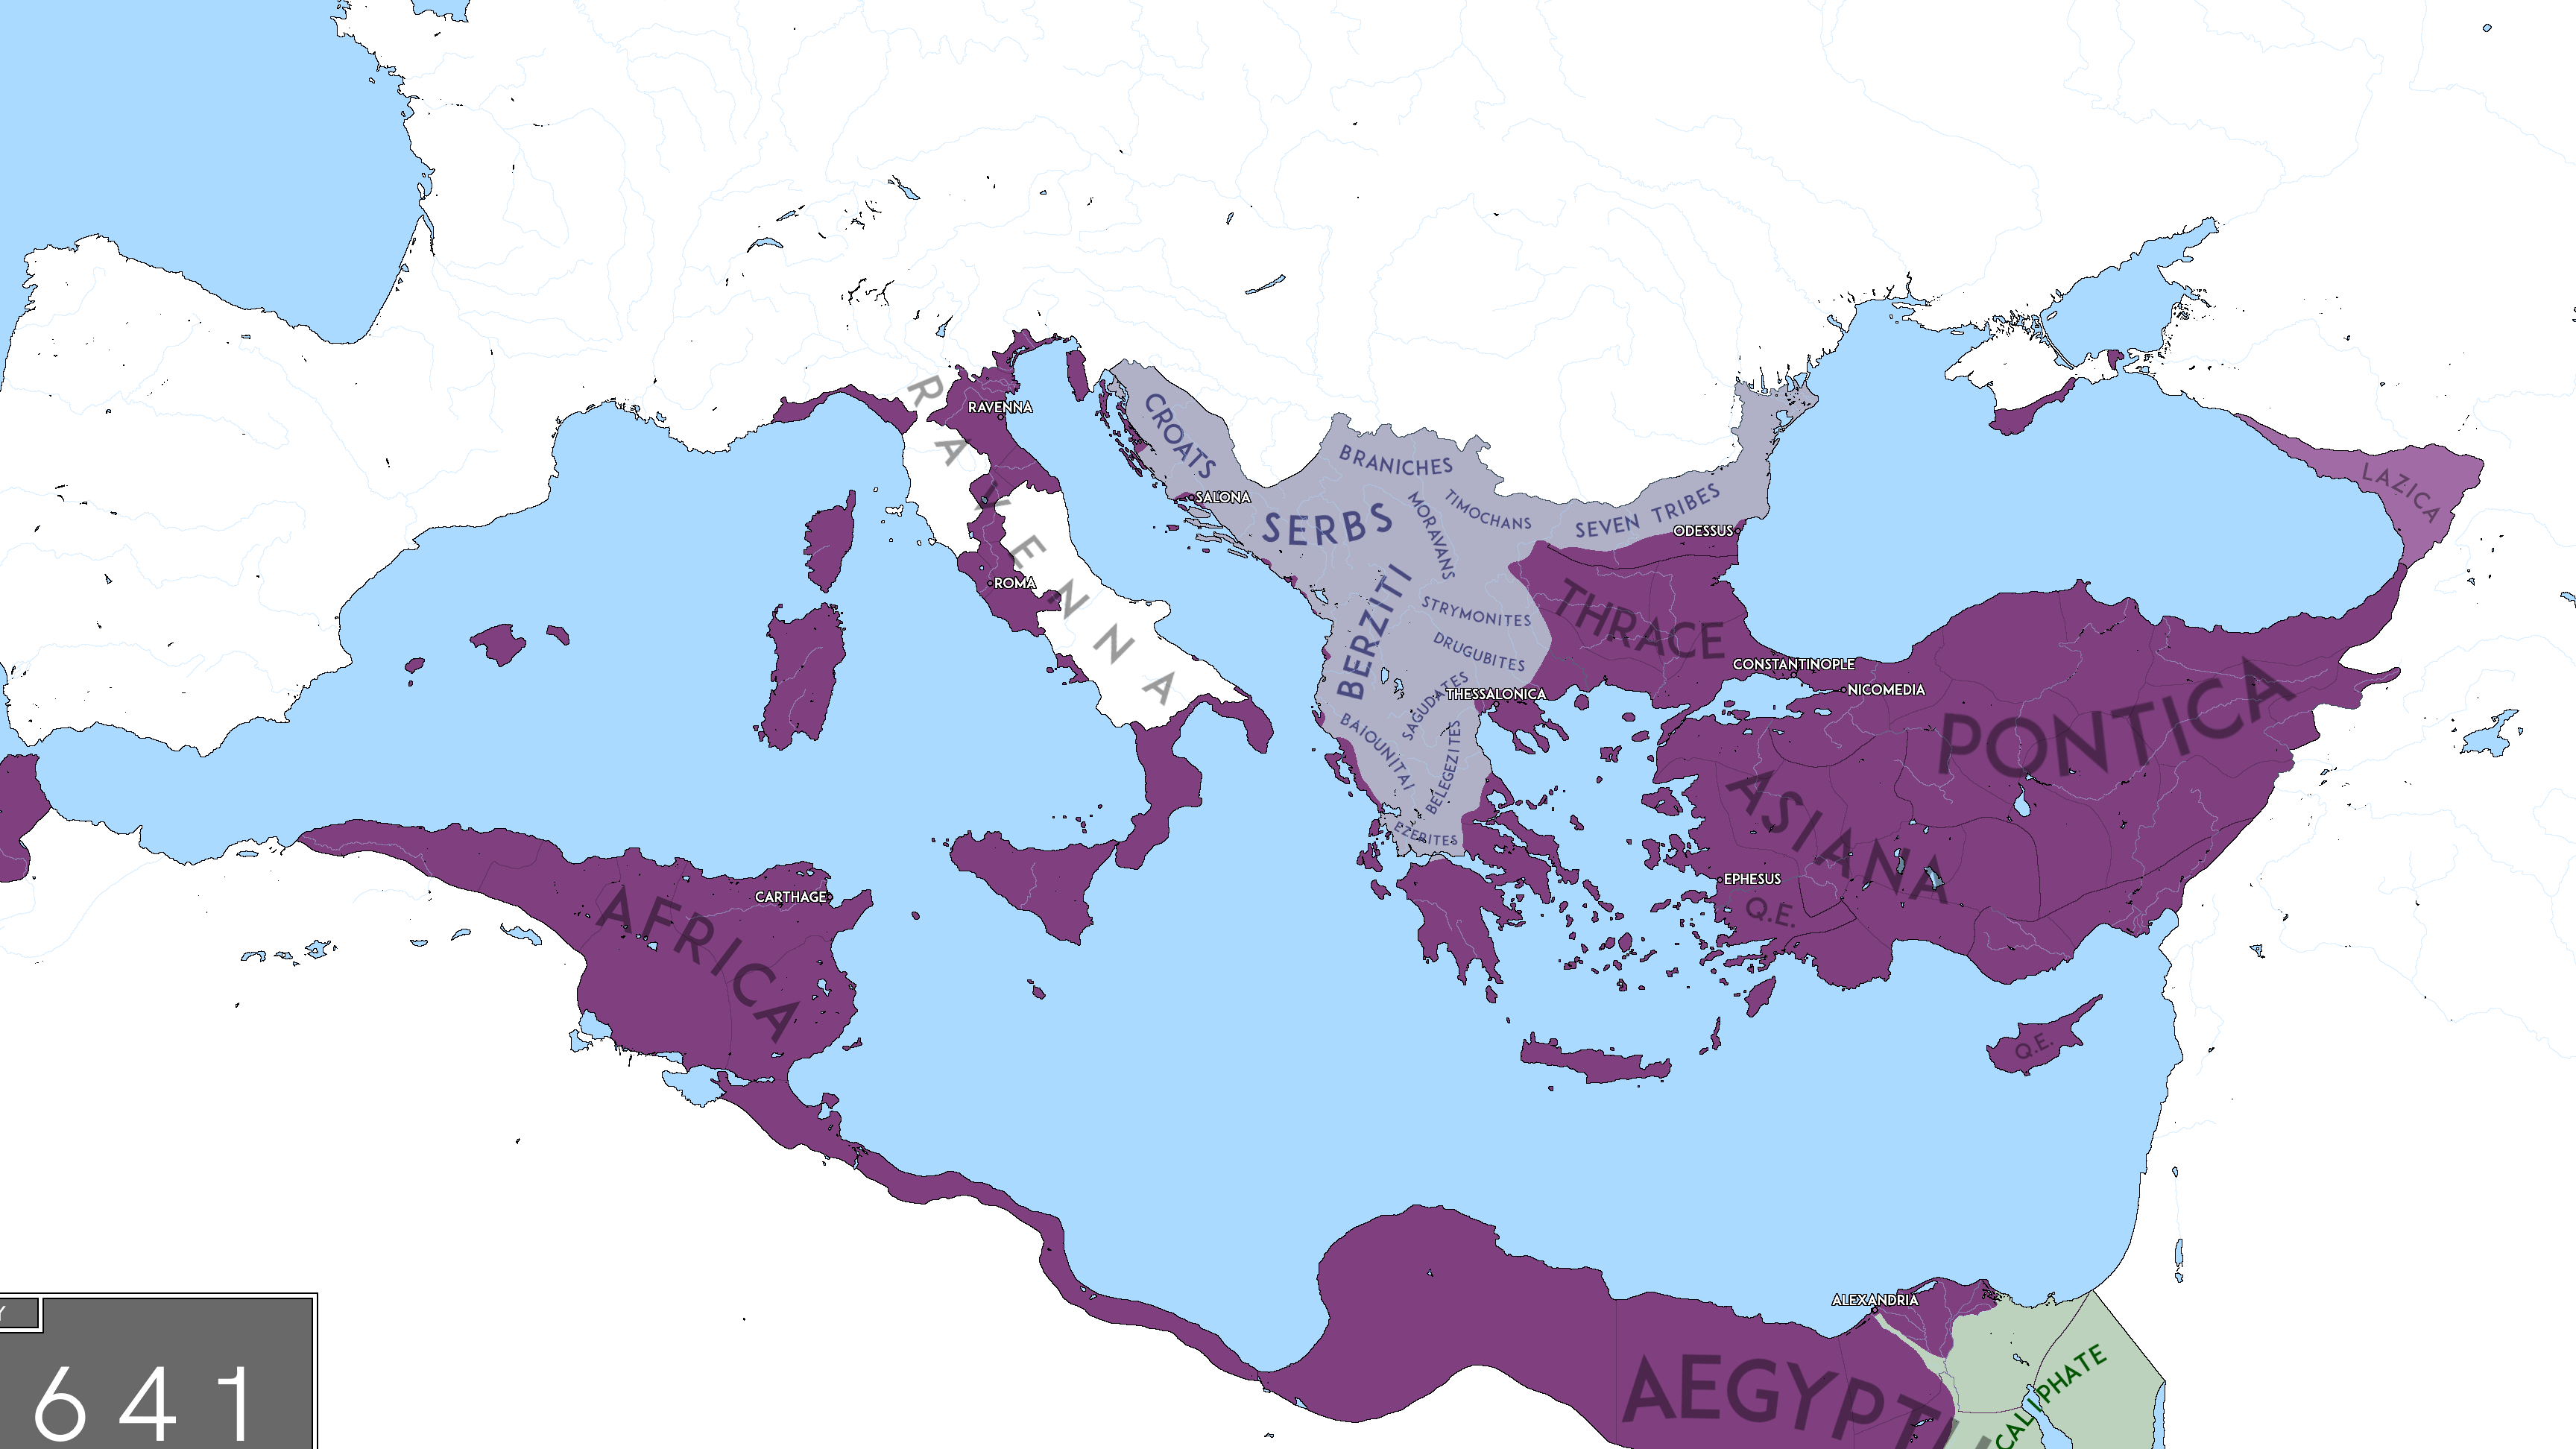 La mudanza de la capital del Imperio Romano por Constantino